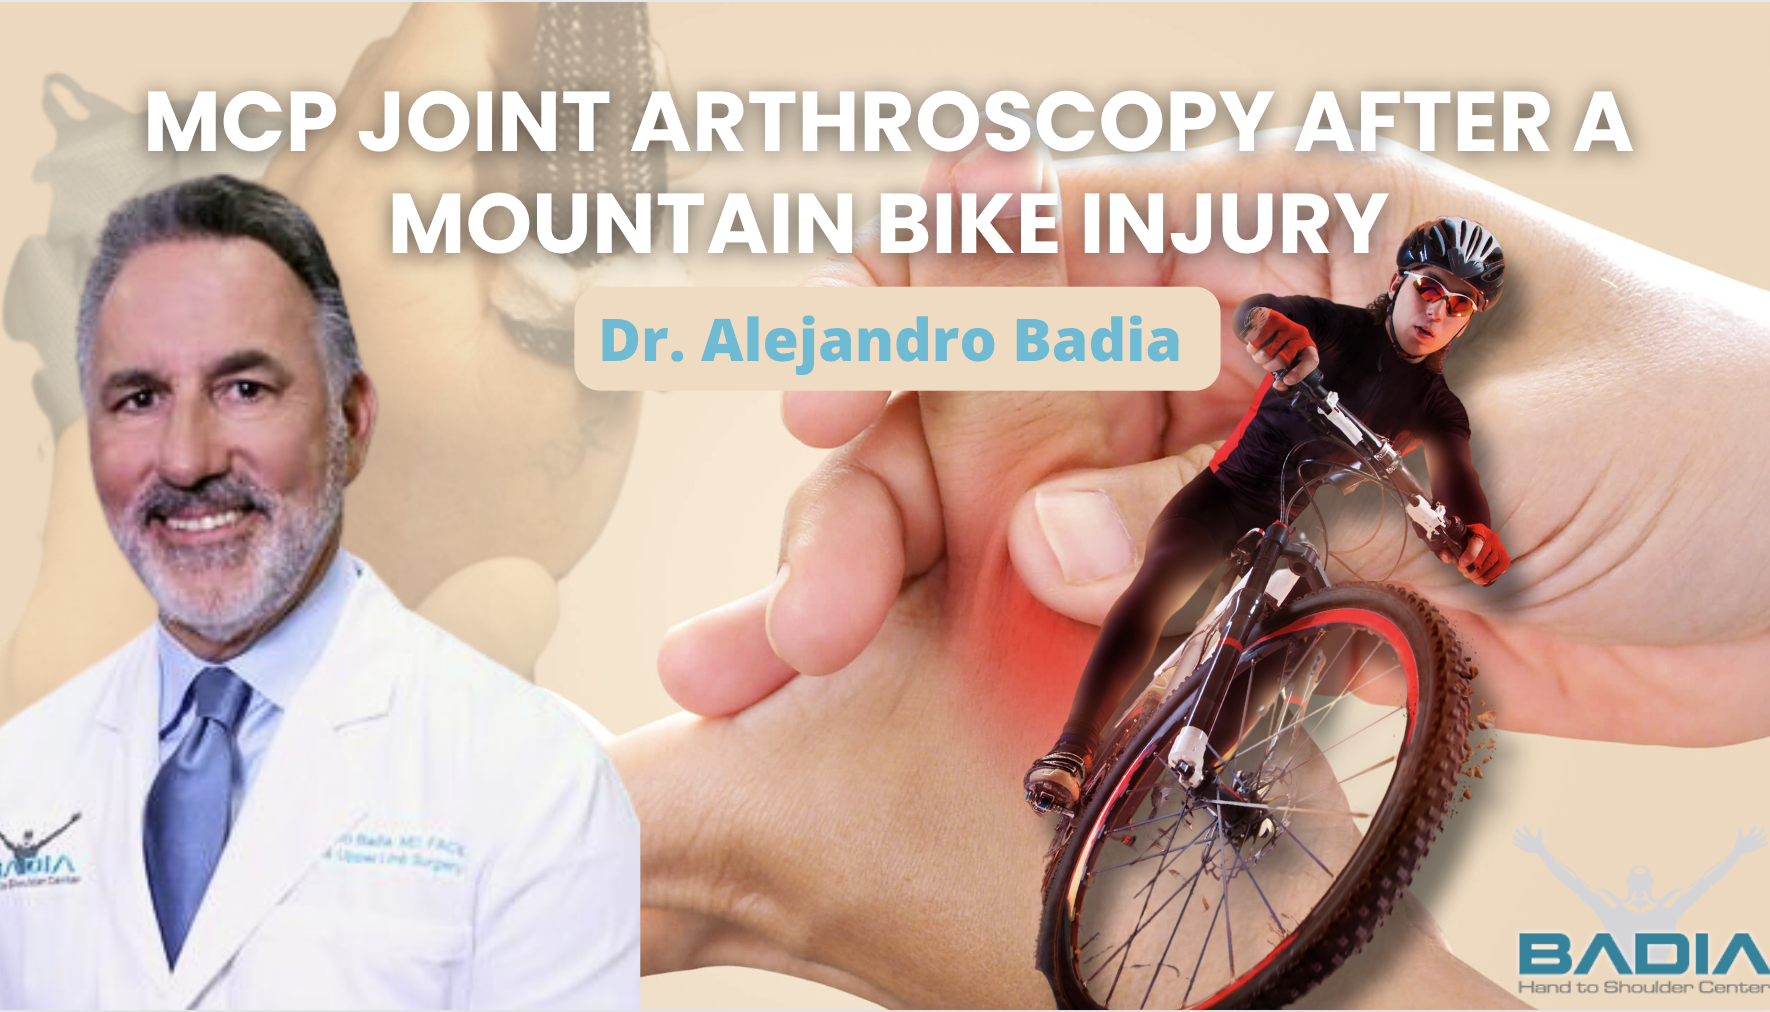 mcp arthroscopy on mountain bike patient cover